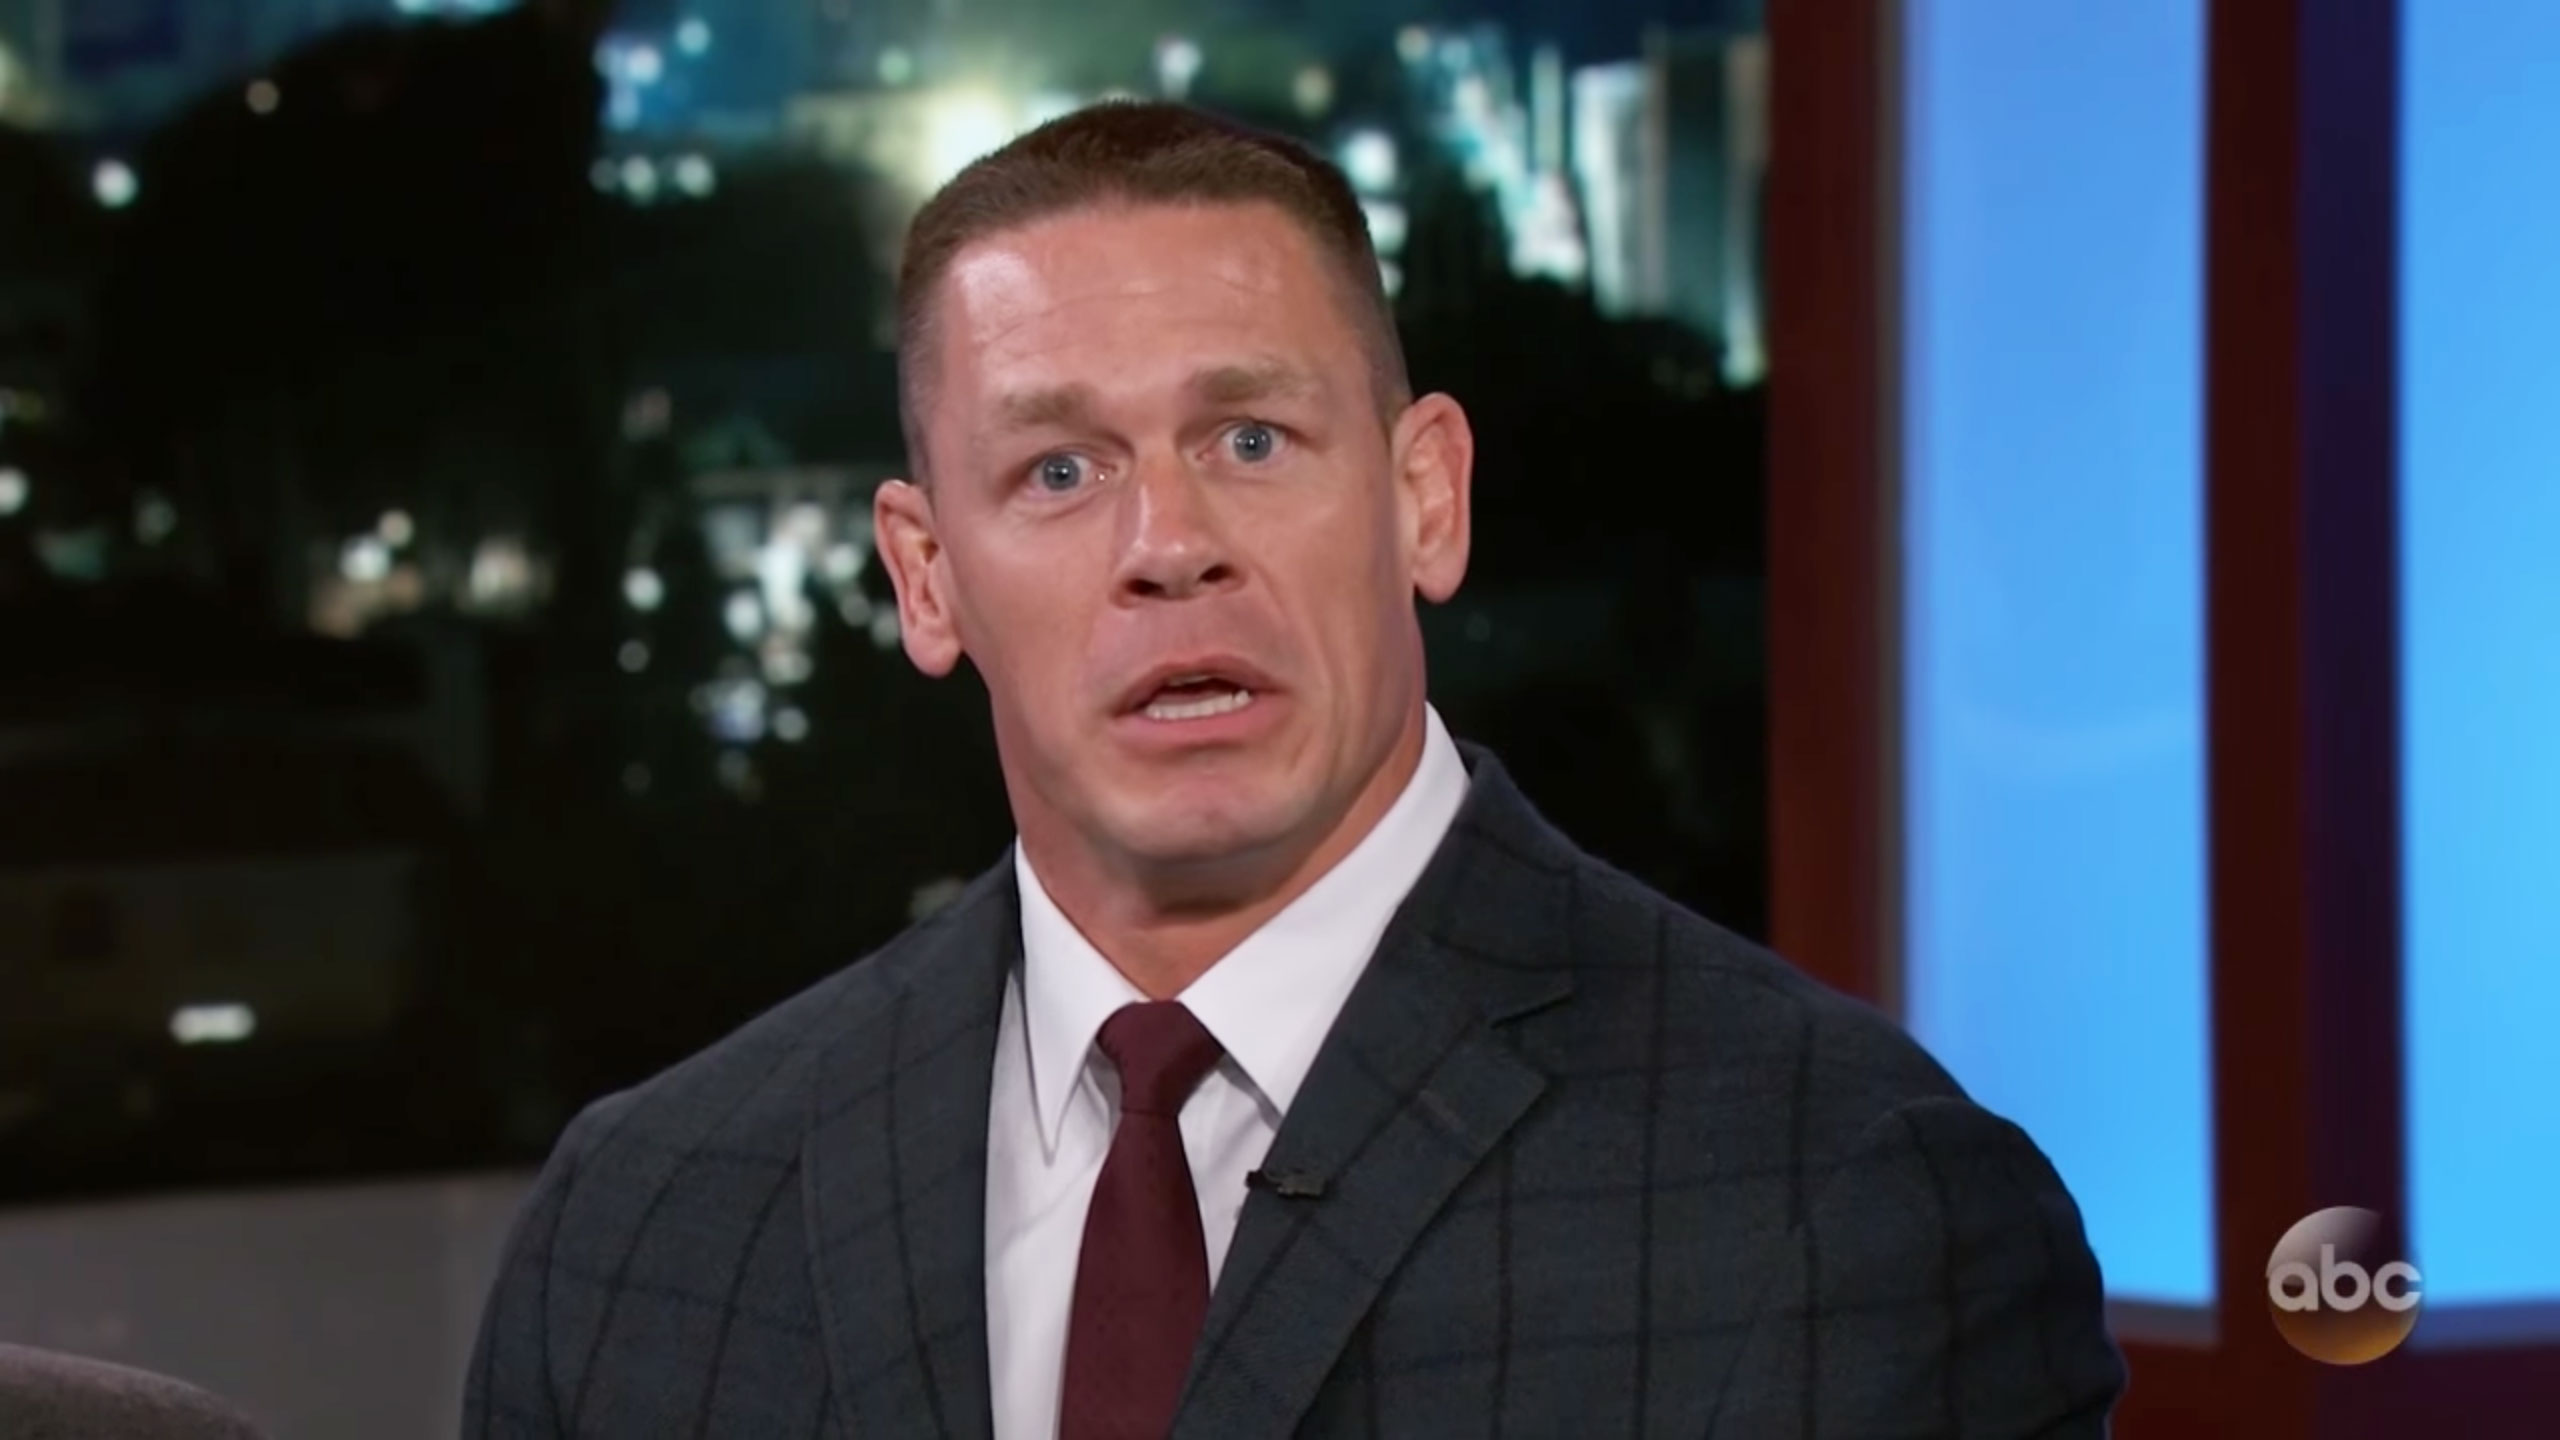 John Cena Responds to the Rock’s Threats, Welcomes an Ass-Cleaning